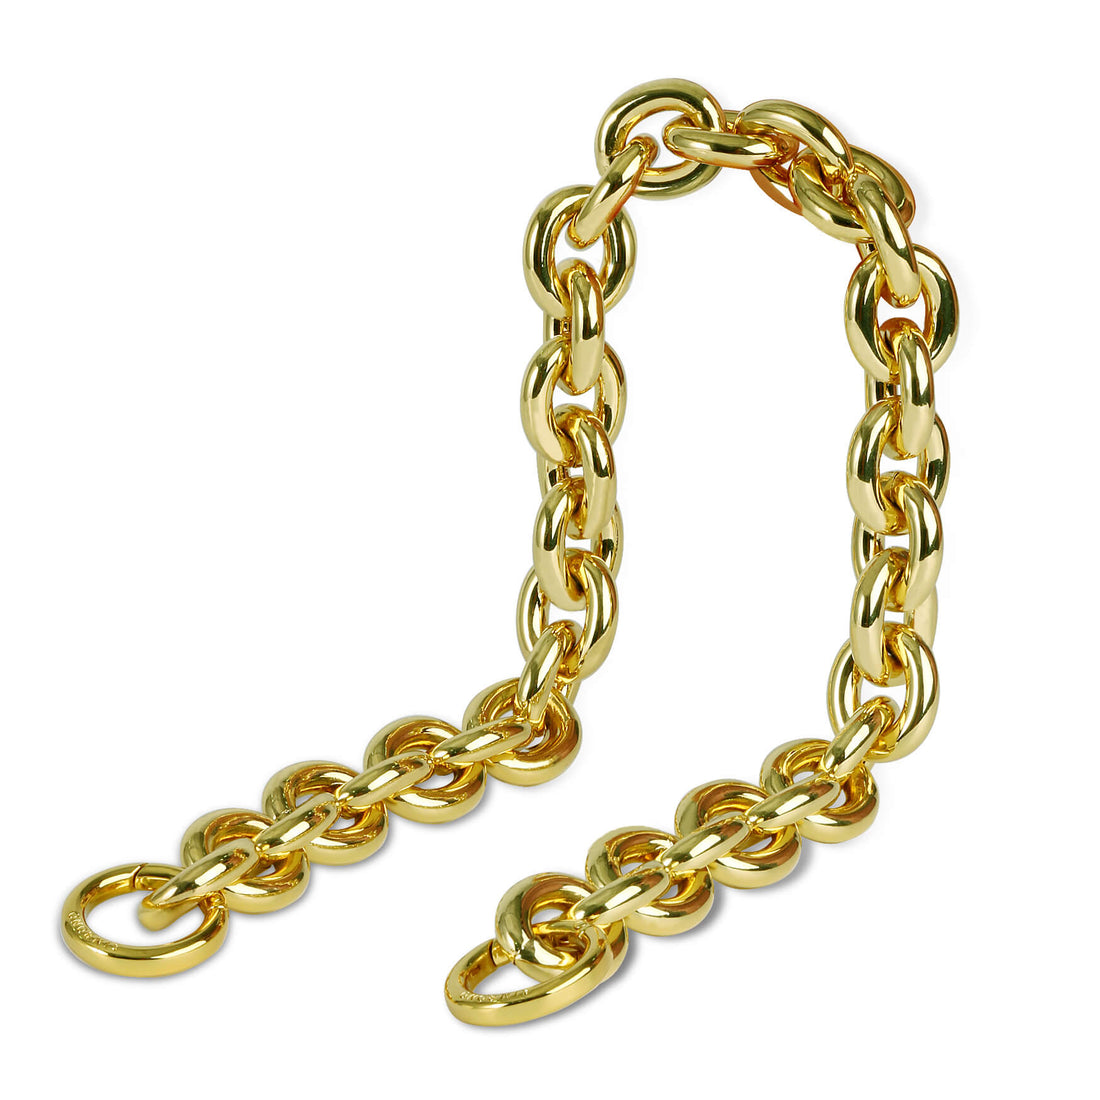 SINBONO European Word Chain Strap Gold - Eco-Friendly Shoulder Chain Strap